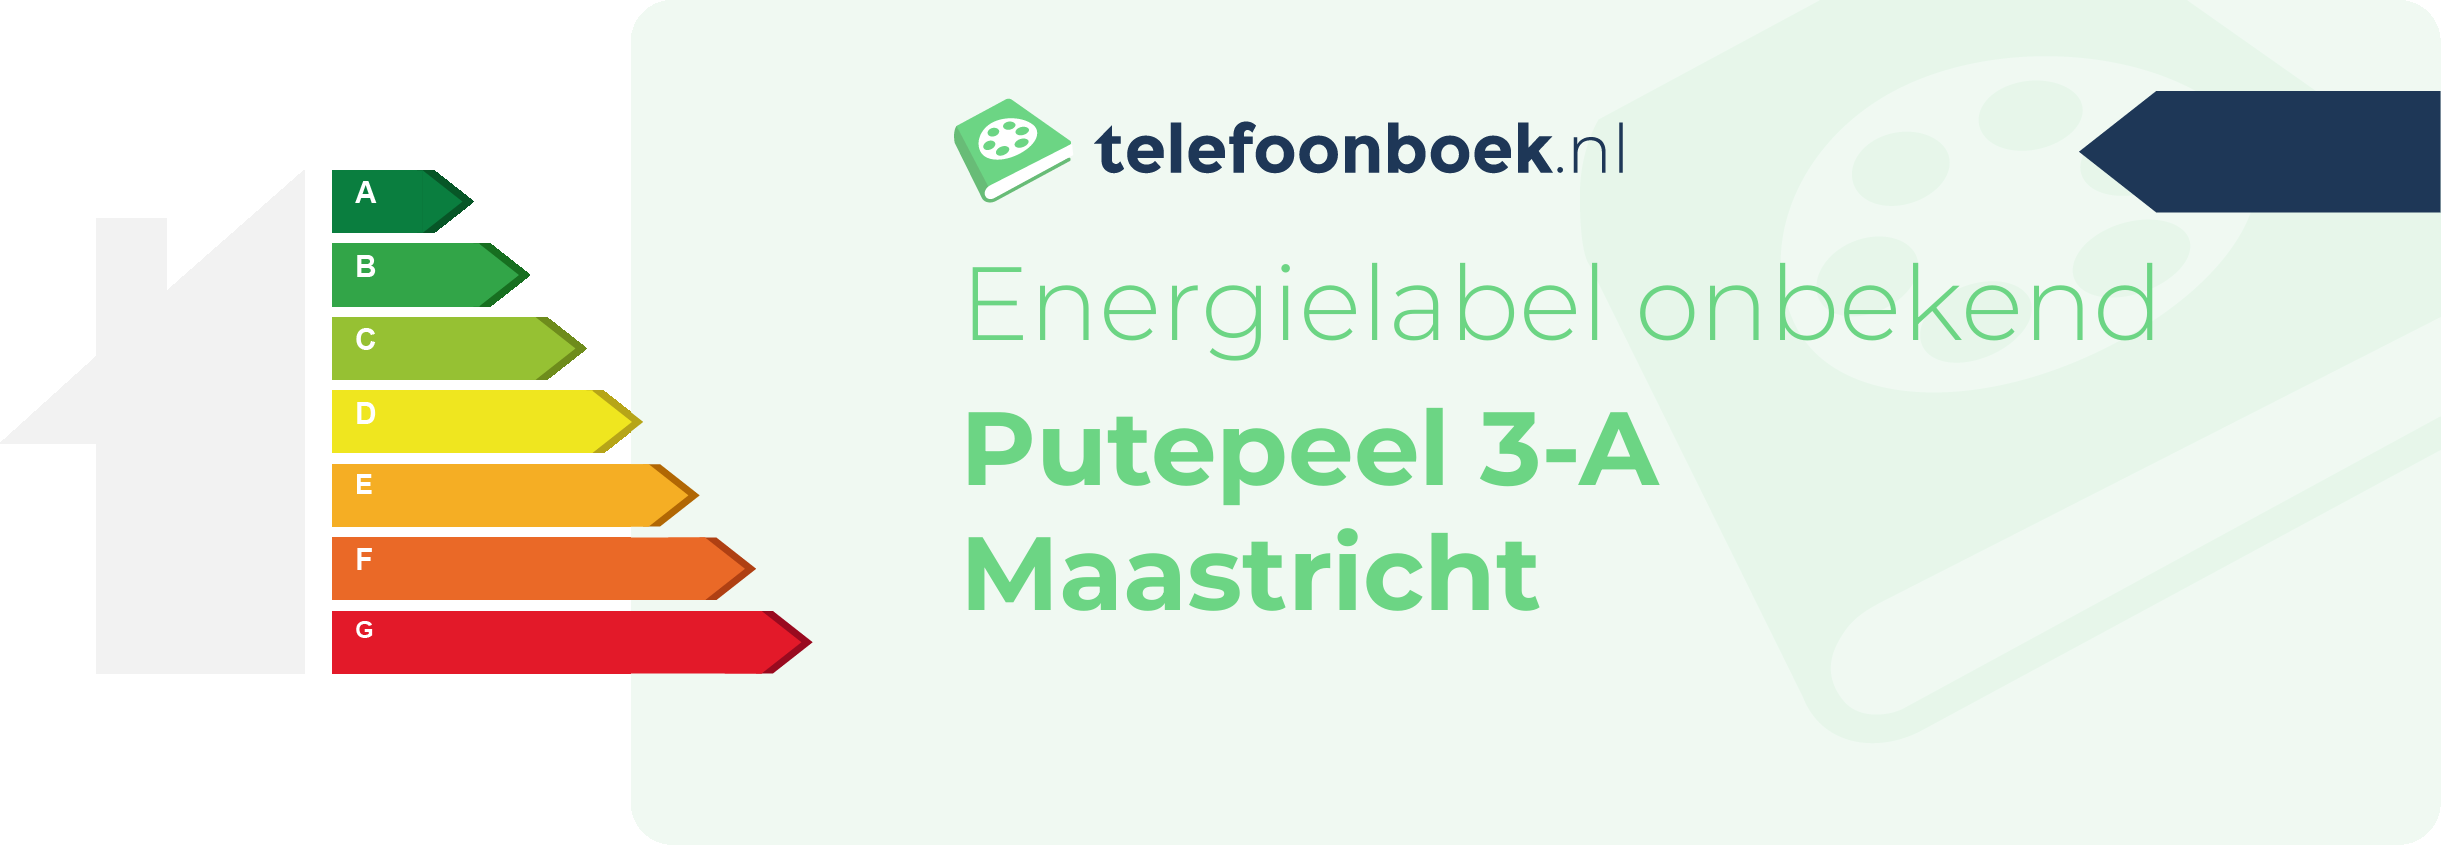 Energielabel Putepeel 3-A Maastricht